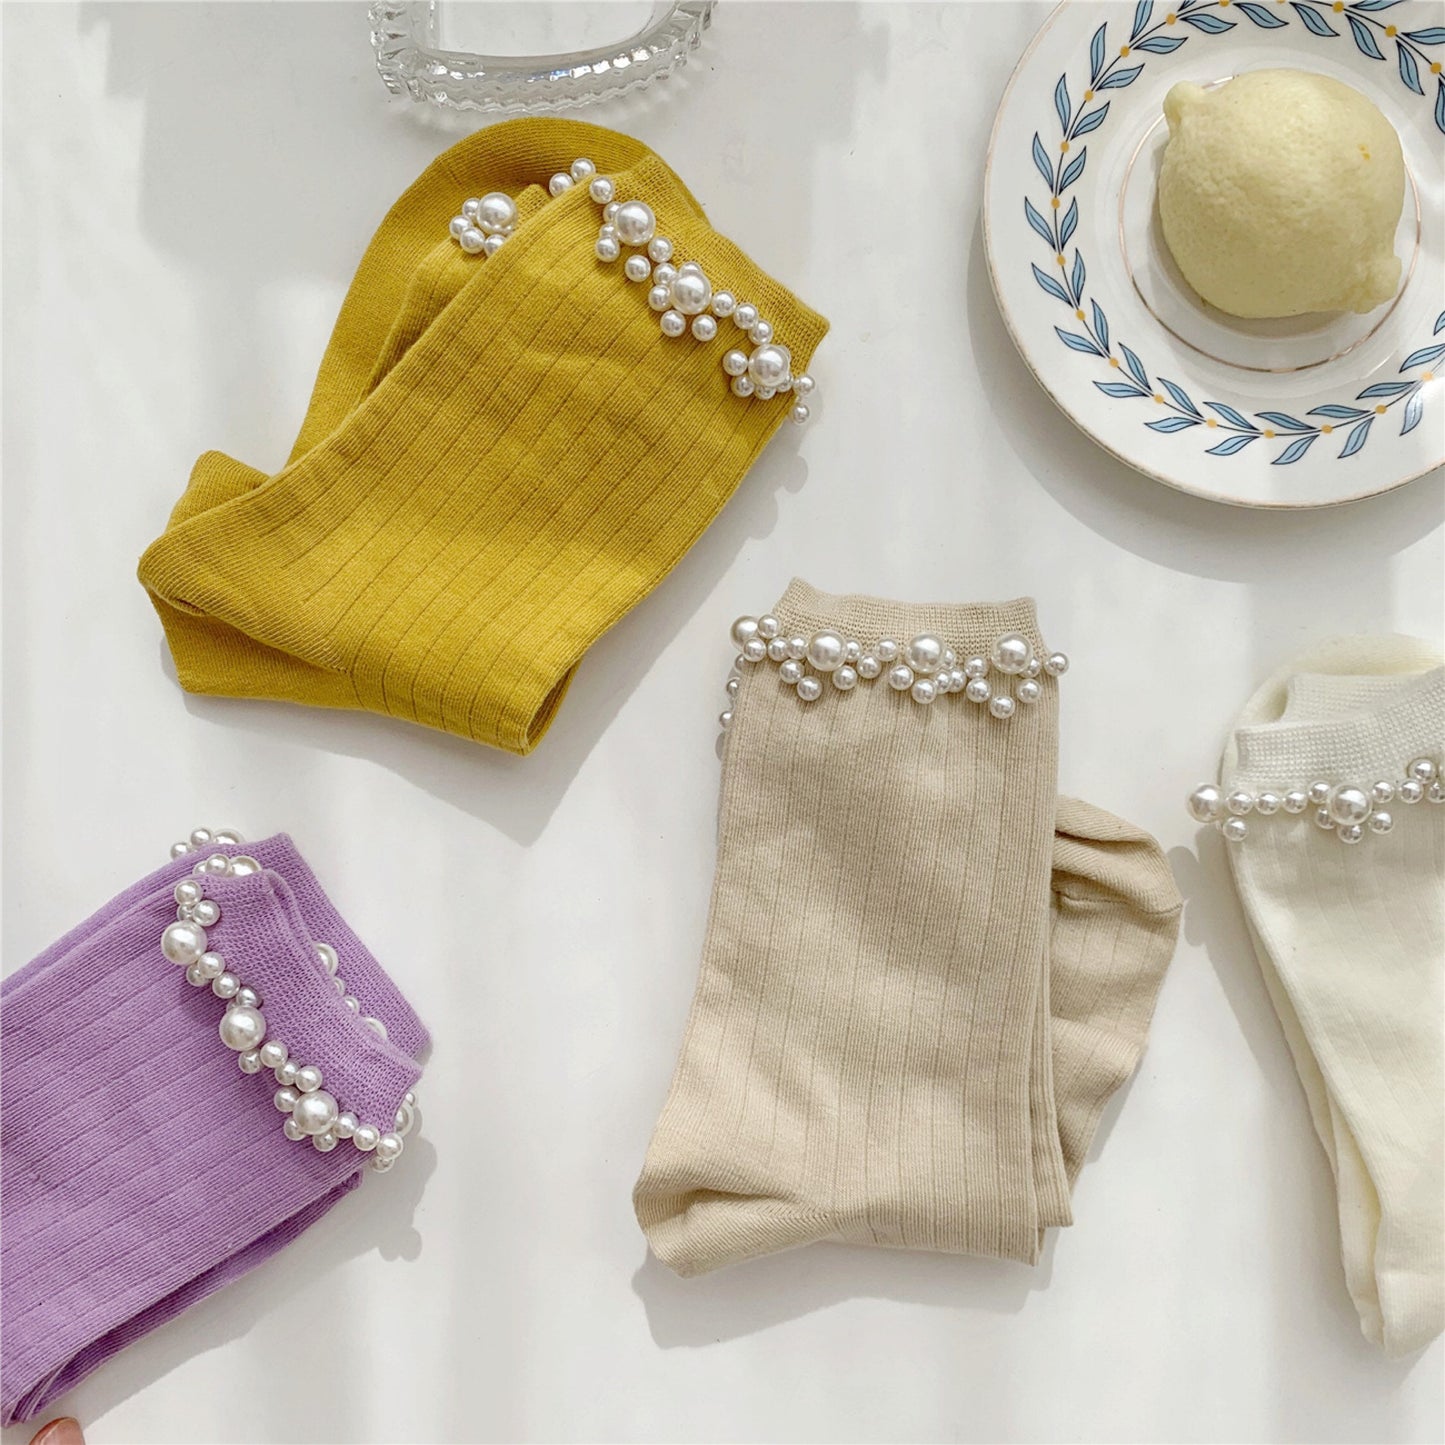 Miss June’s | Women’s | 1 pair cotton Beading socks｜Creative | Colorful |Craft| Cotton | Designed | Art | Gift Idea | Cute | Comfortable